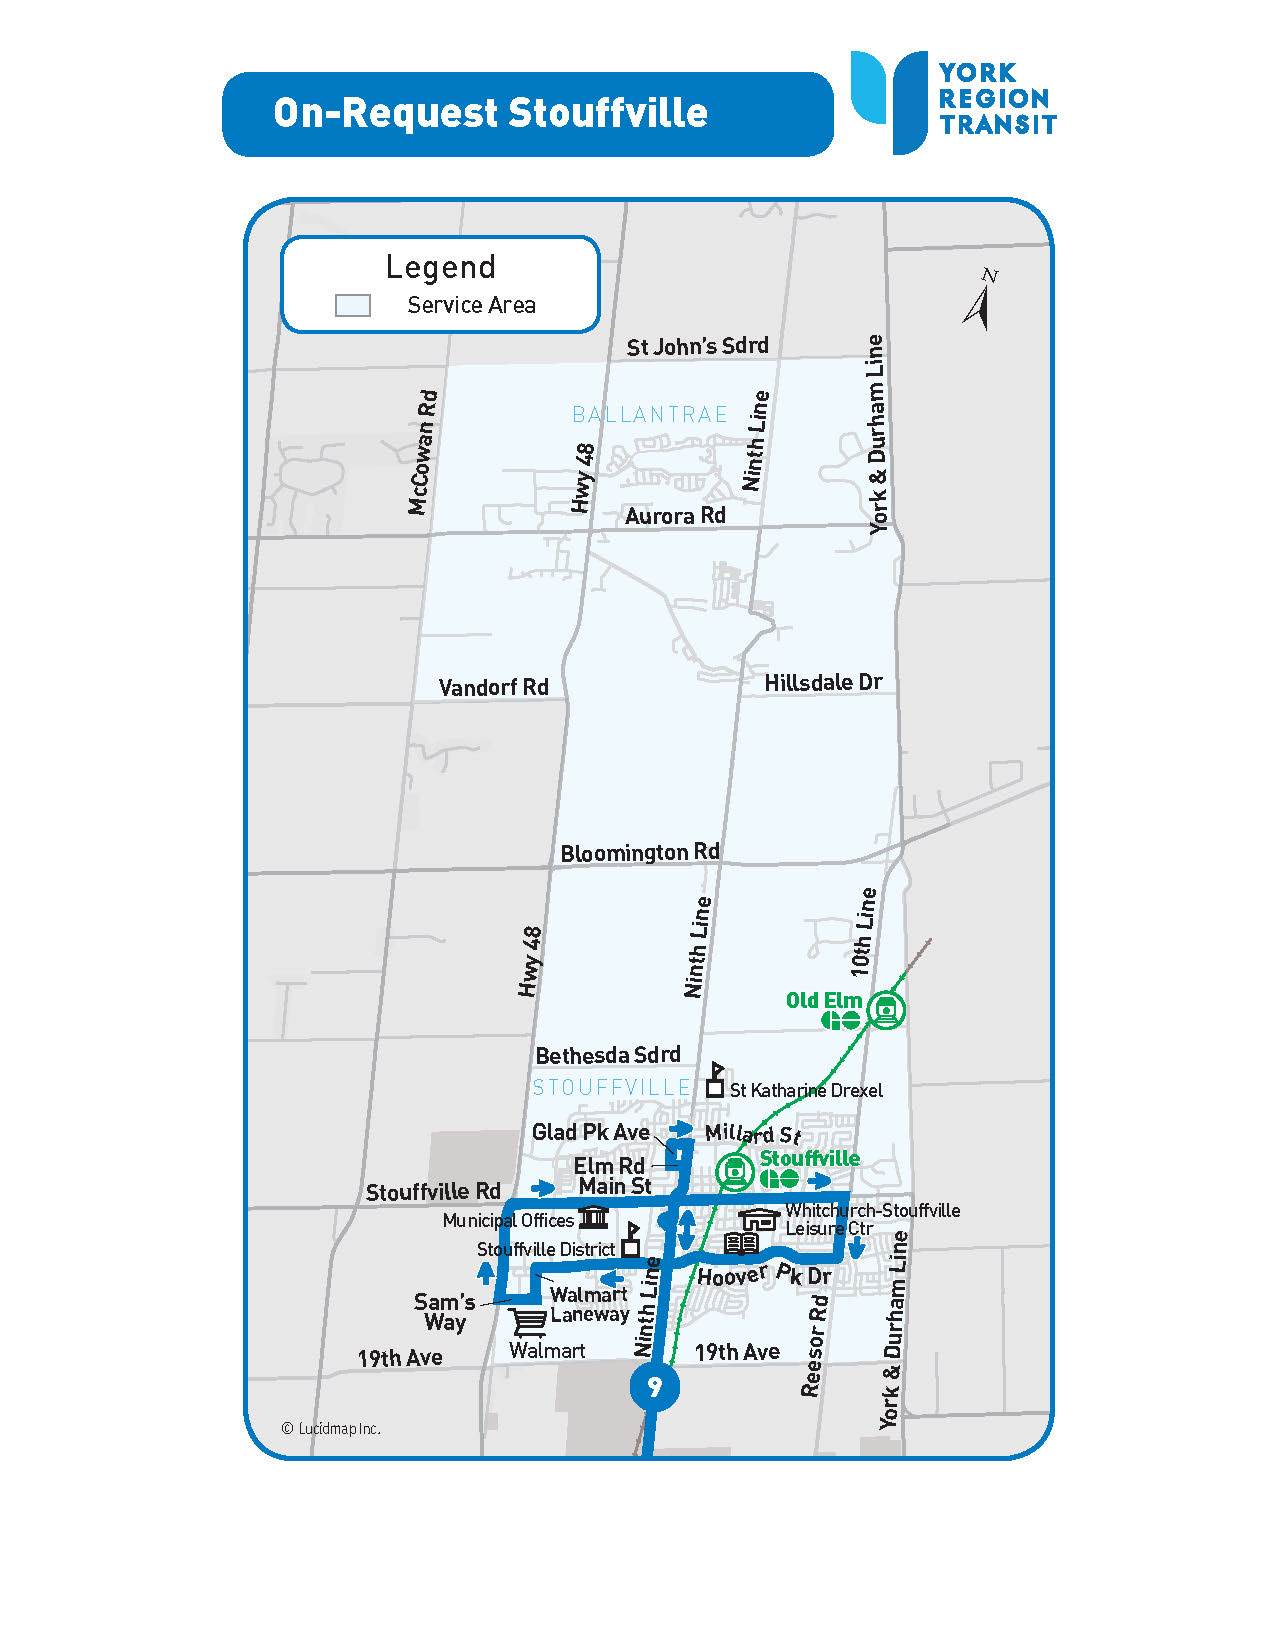 On-Request Stouffville service area map